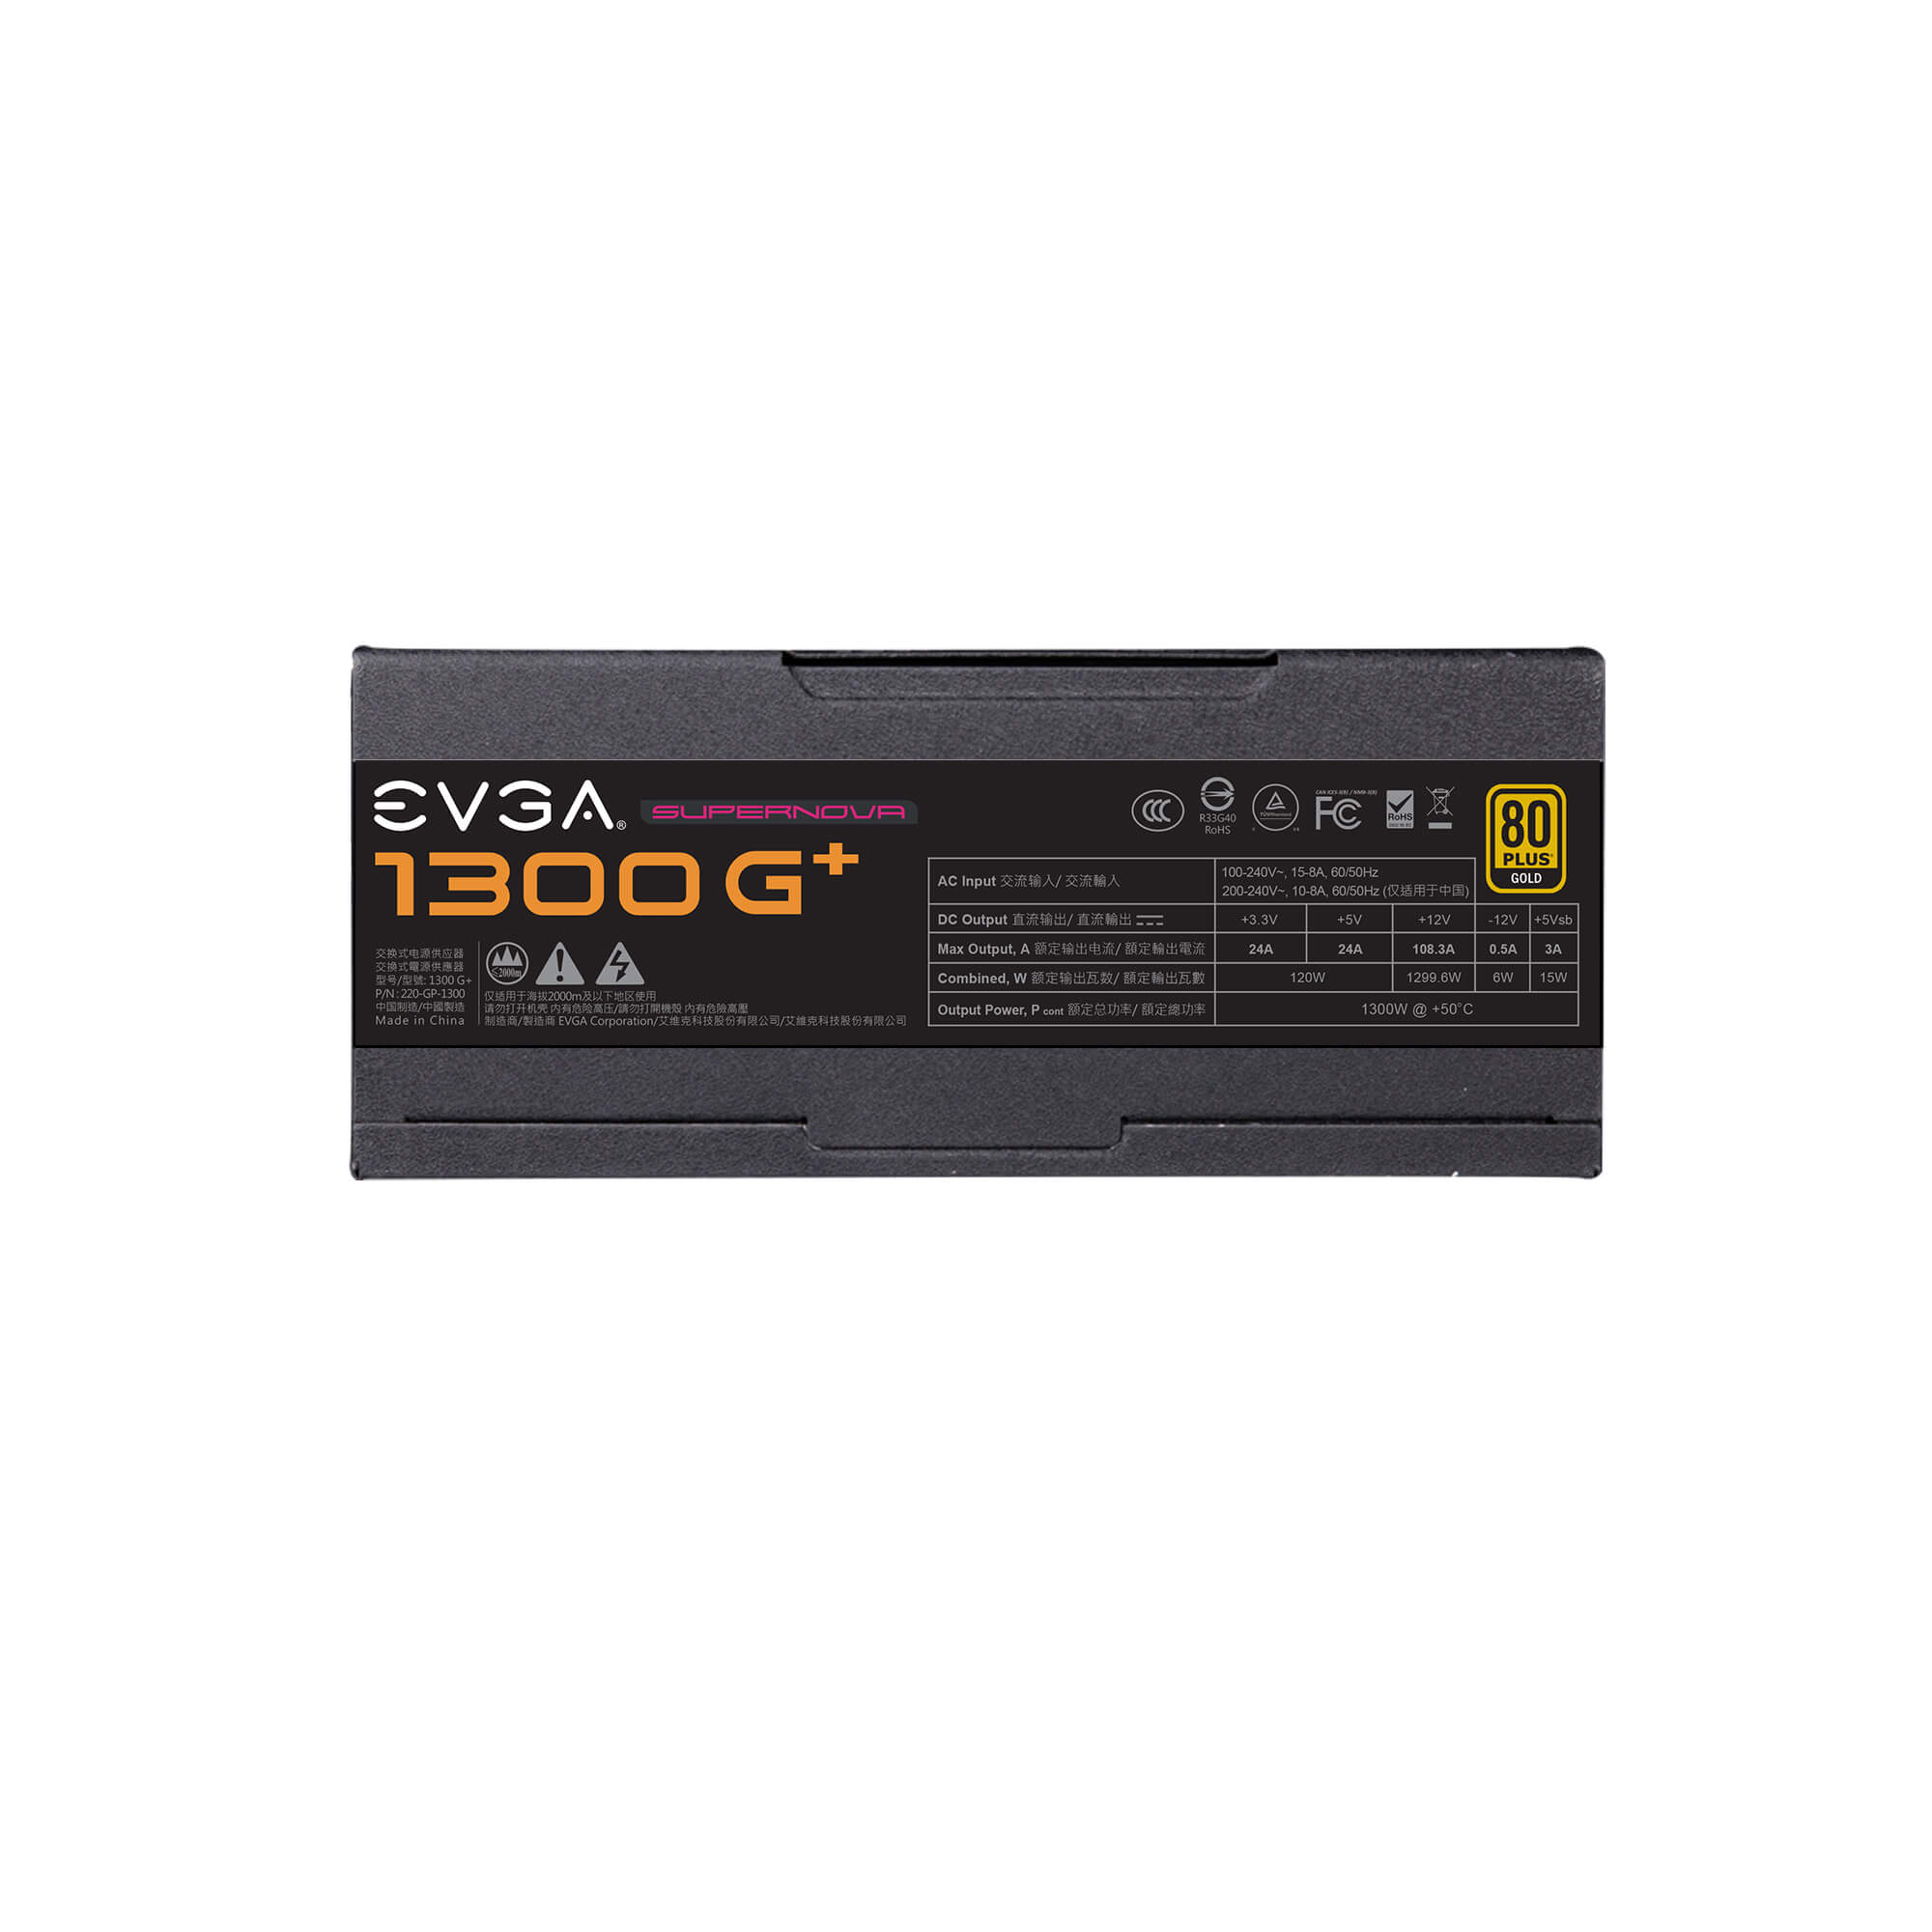 EVGA SuperNova 1300 G+